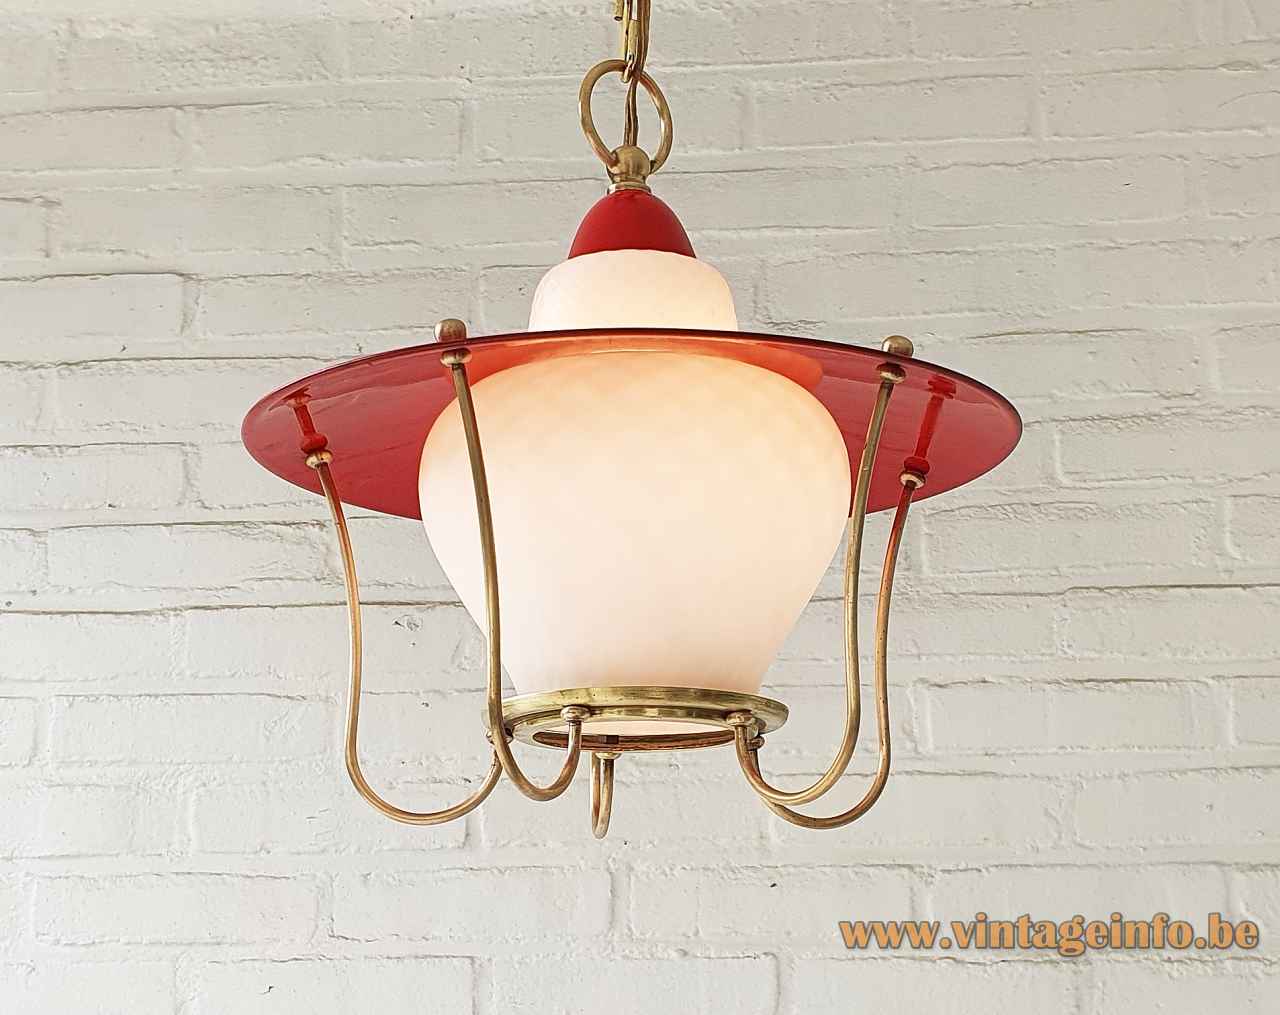 Massive lantern pendant lamp brass rods & chain opal glass lampshade red metal lid 1960s Belgium